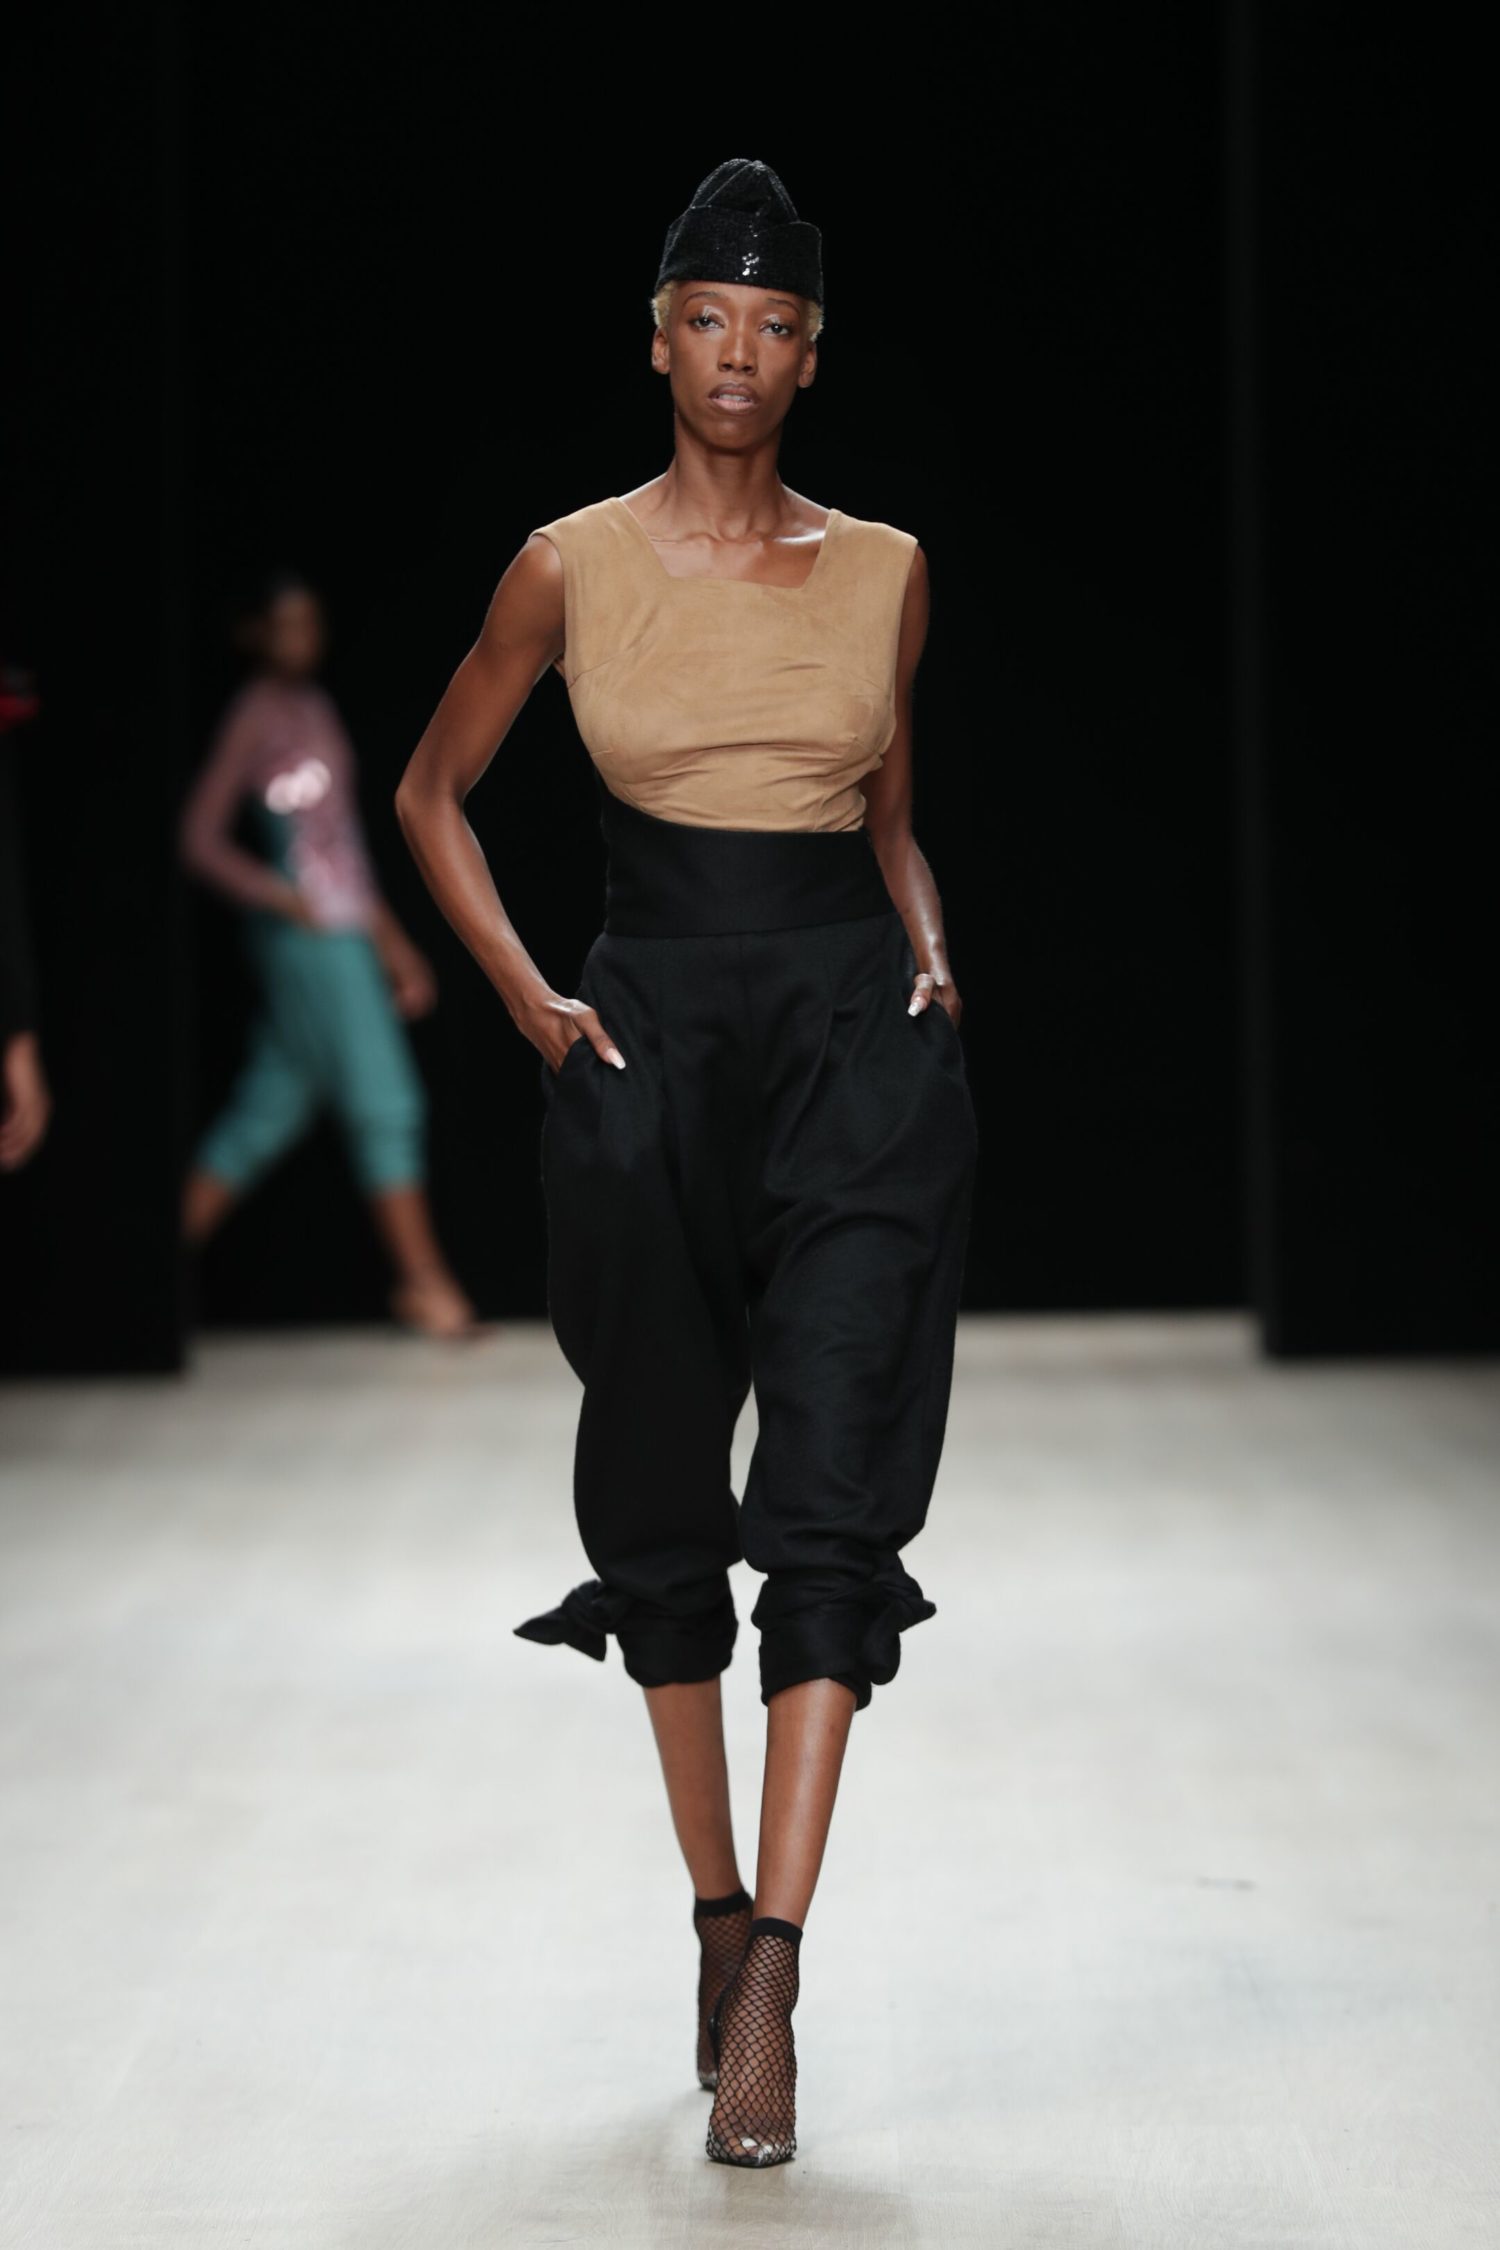 ARISE Fashion Week 2019 | Mwinda